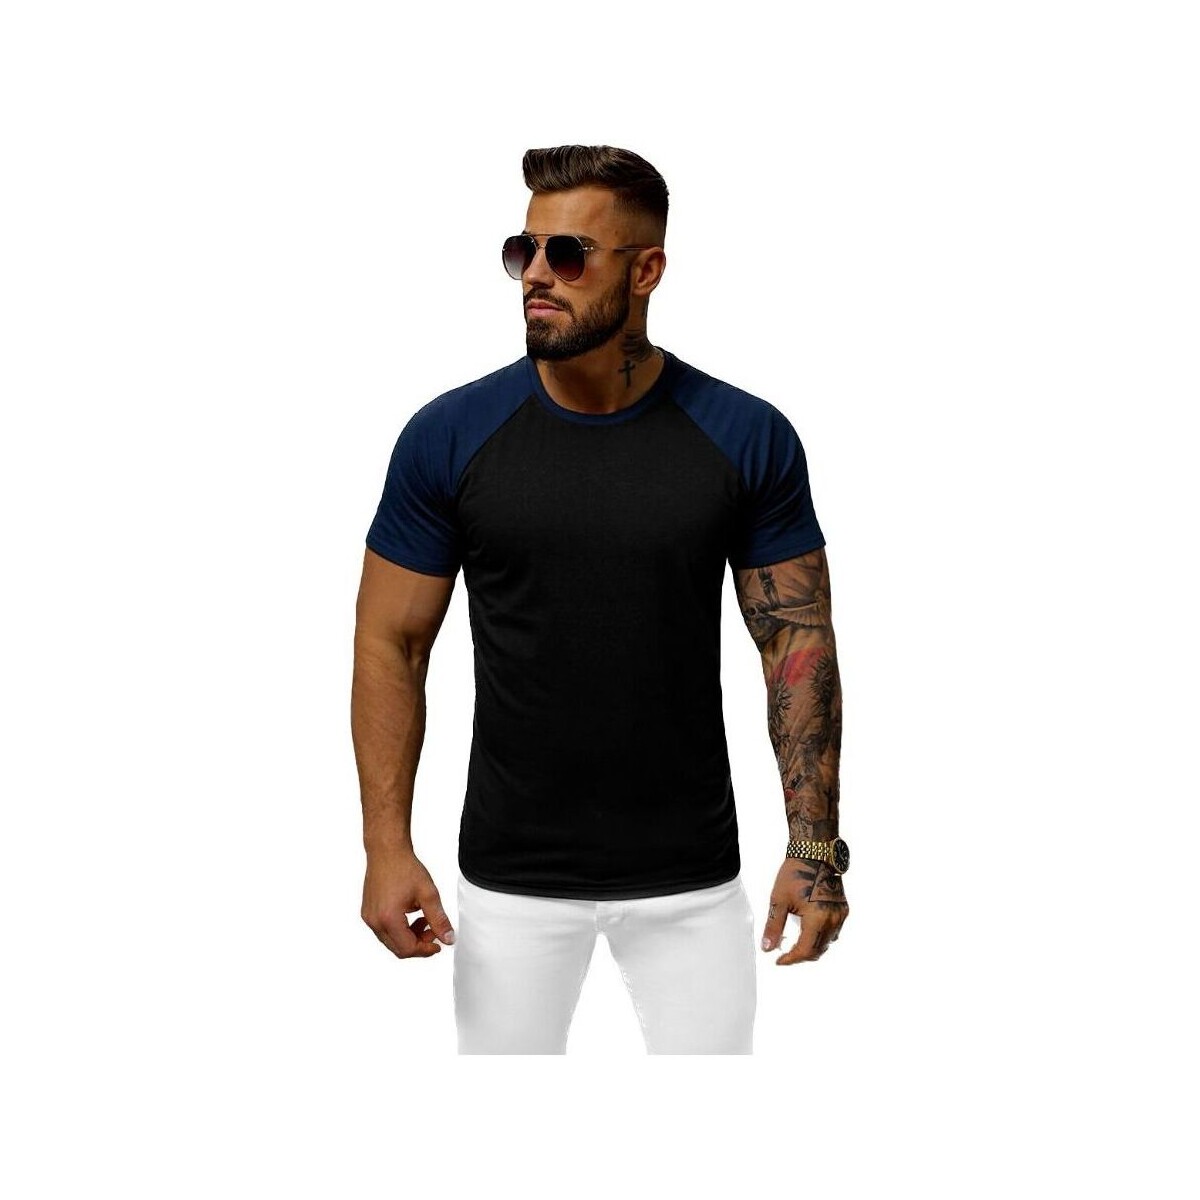 Textil Muži Trička s krátkým rukávem Ozonee Pánské tričko s krátkým rukávem Shaft černo-navy Černá/Modrá tmavá